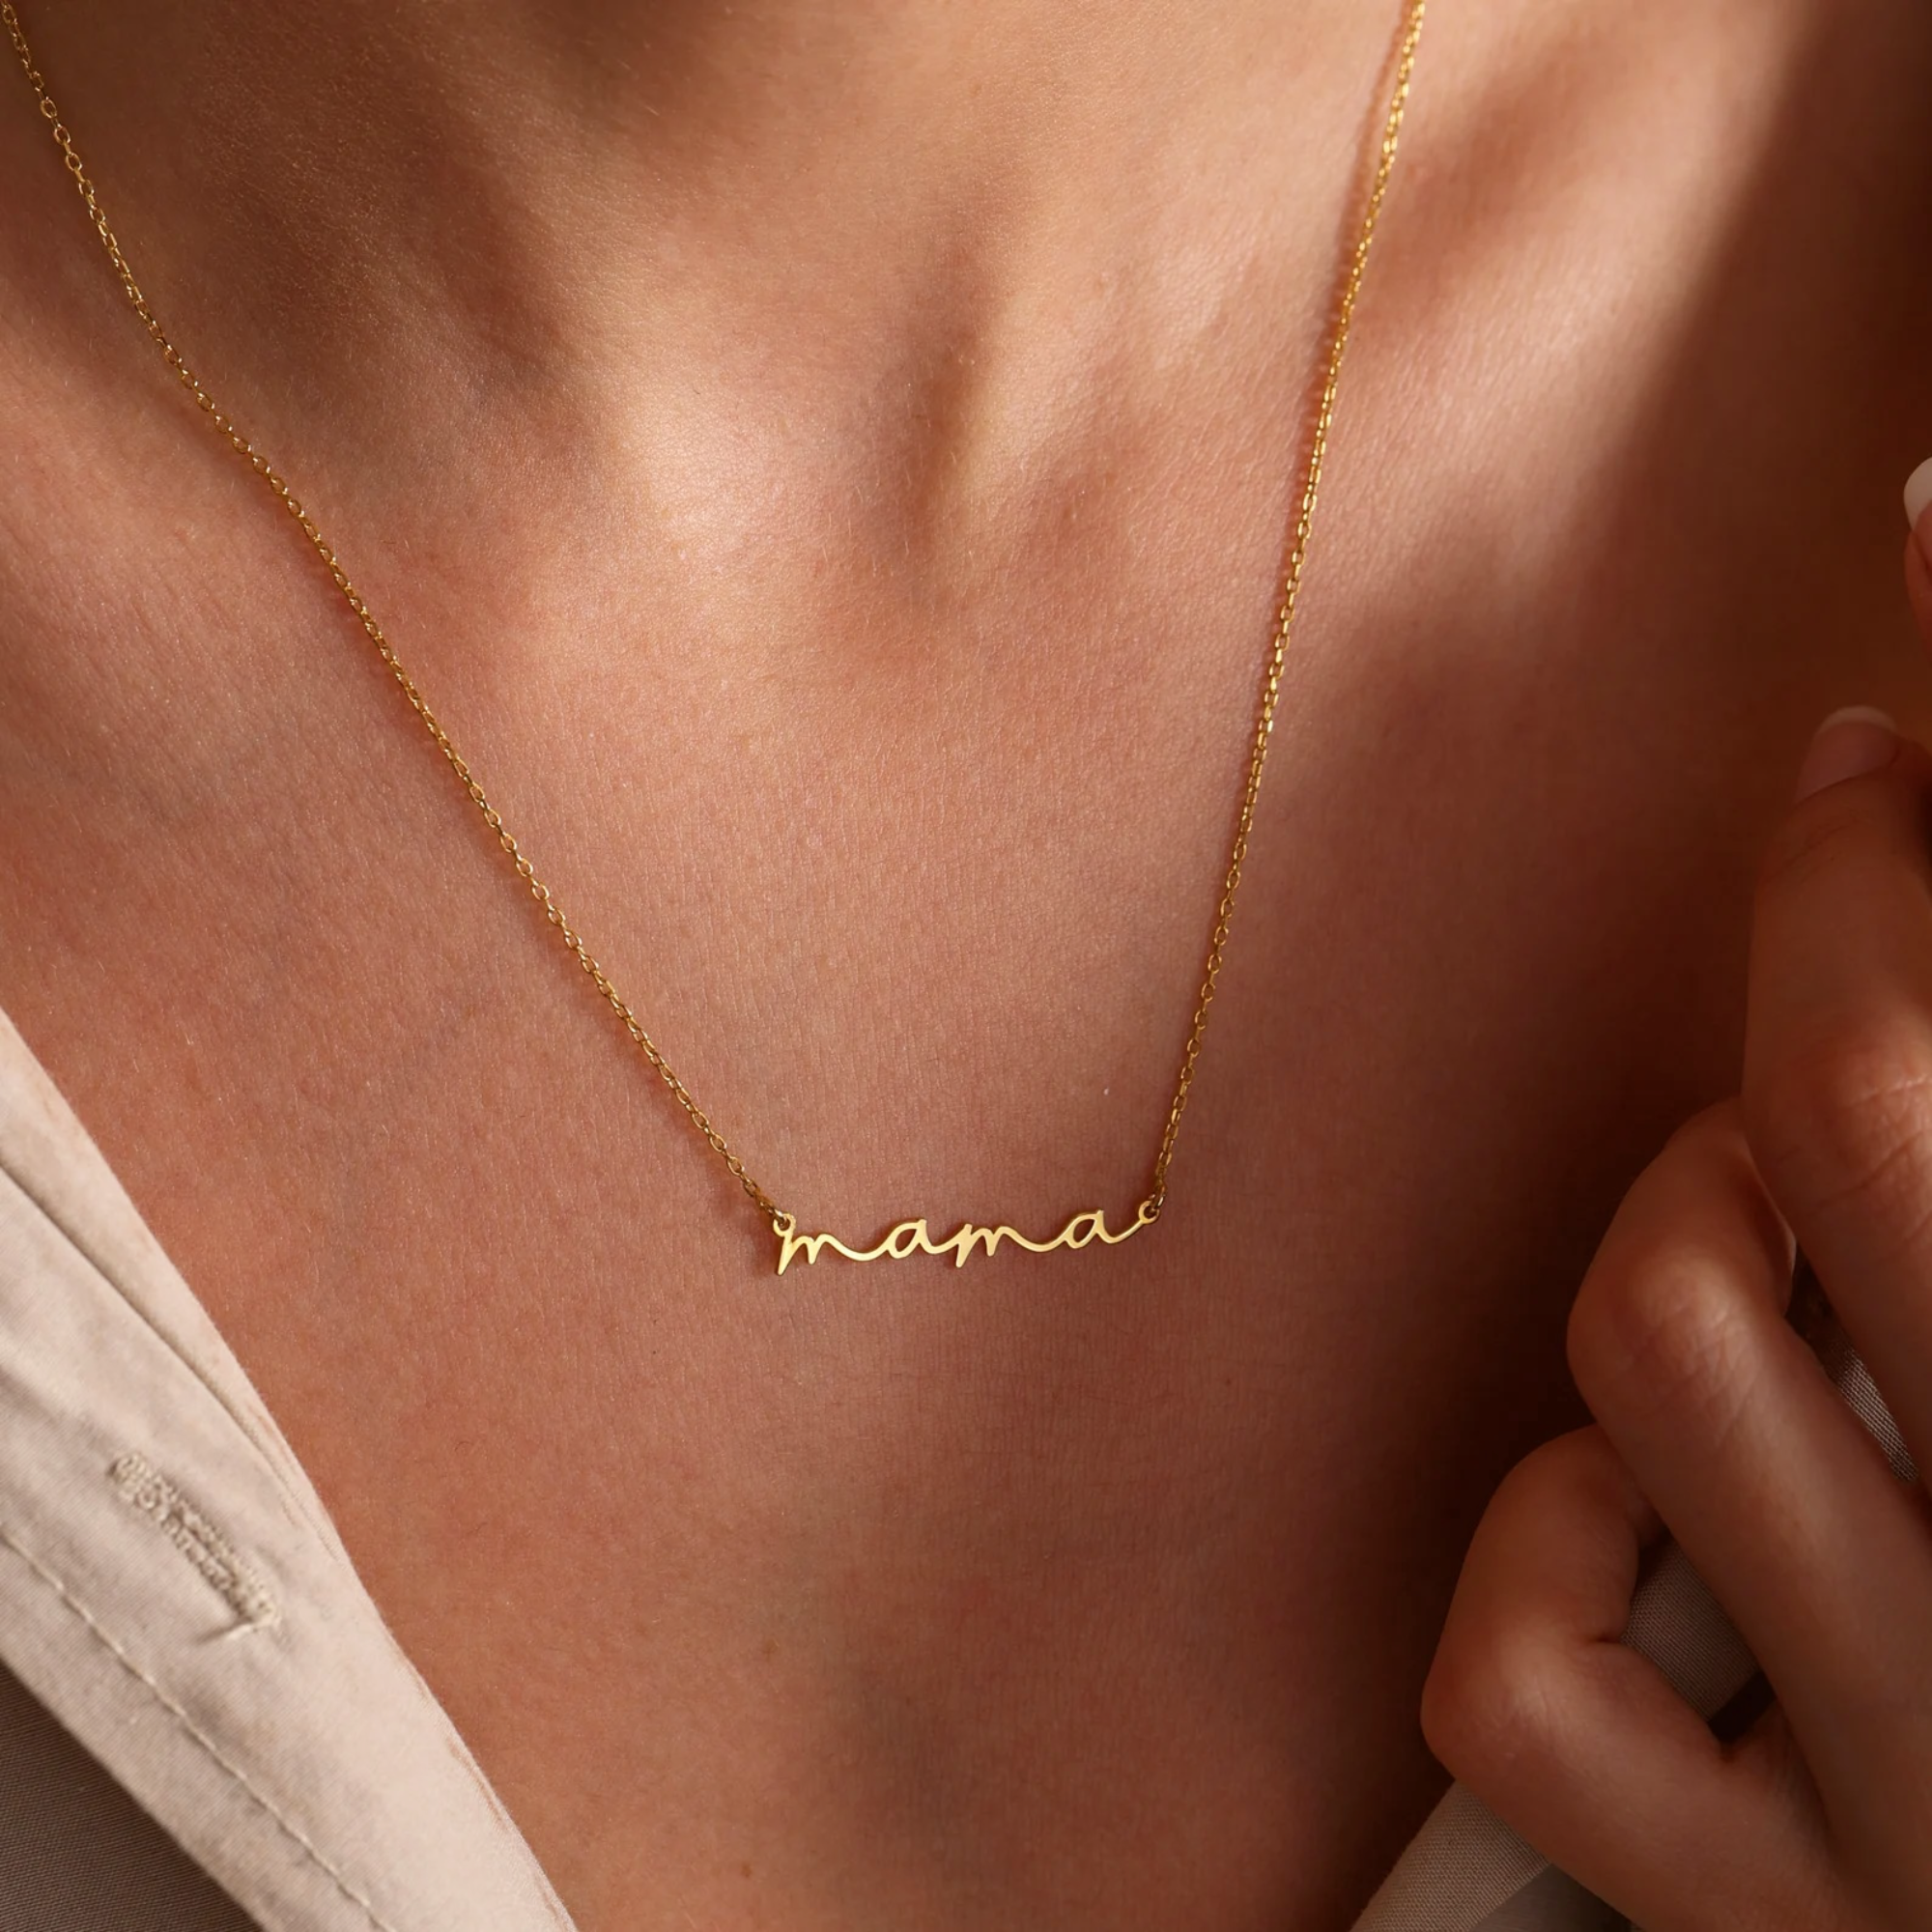 santa monica 14k gold mama necklace - $220